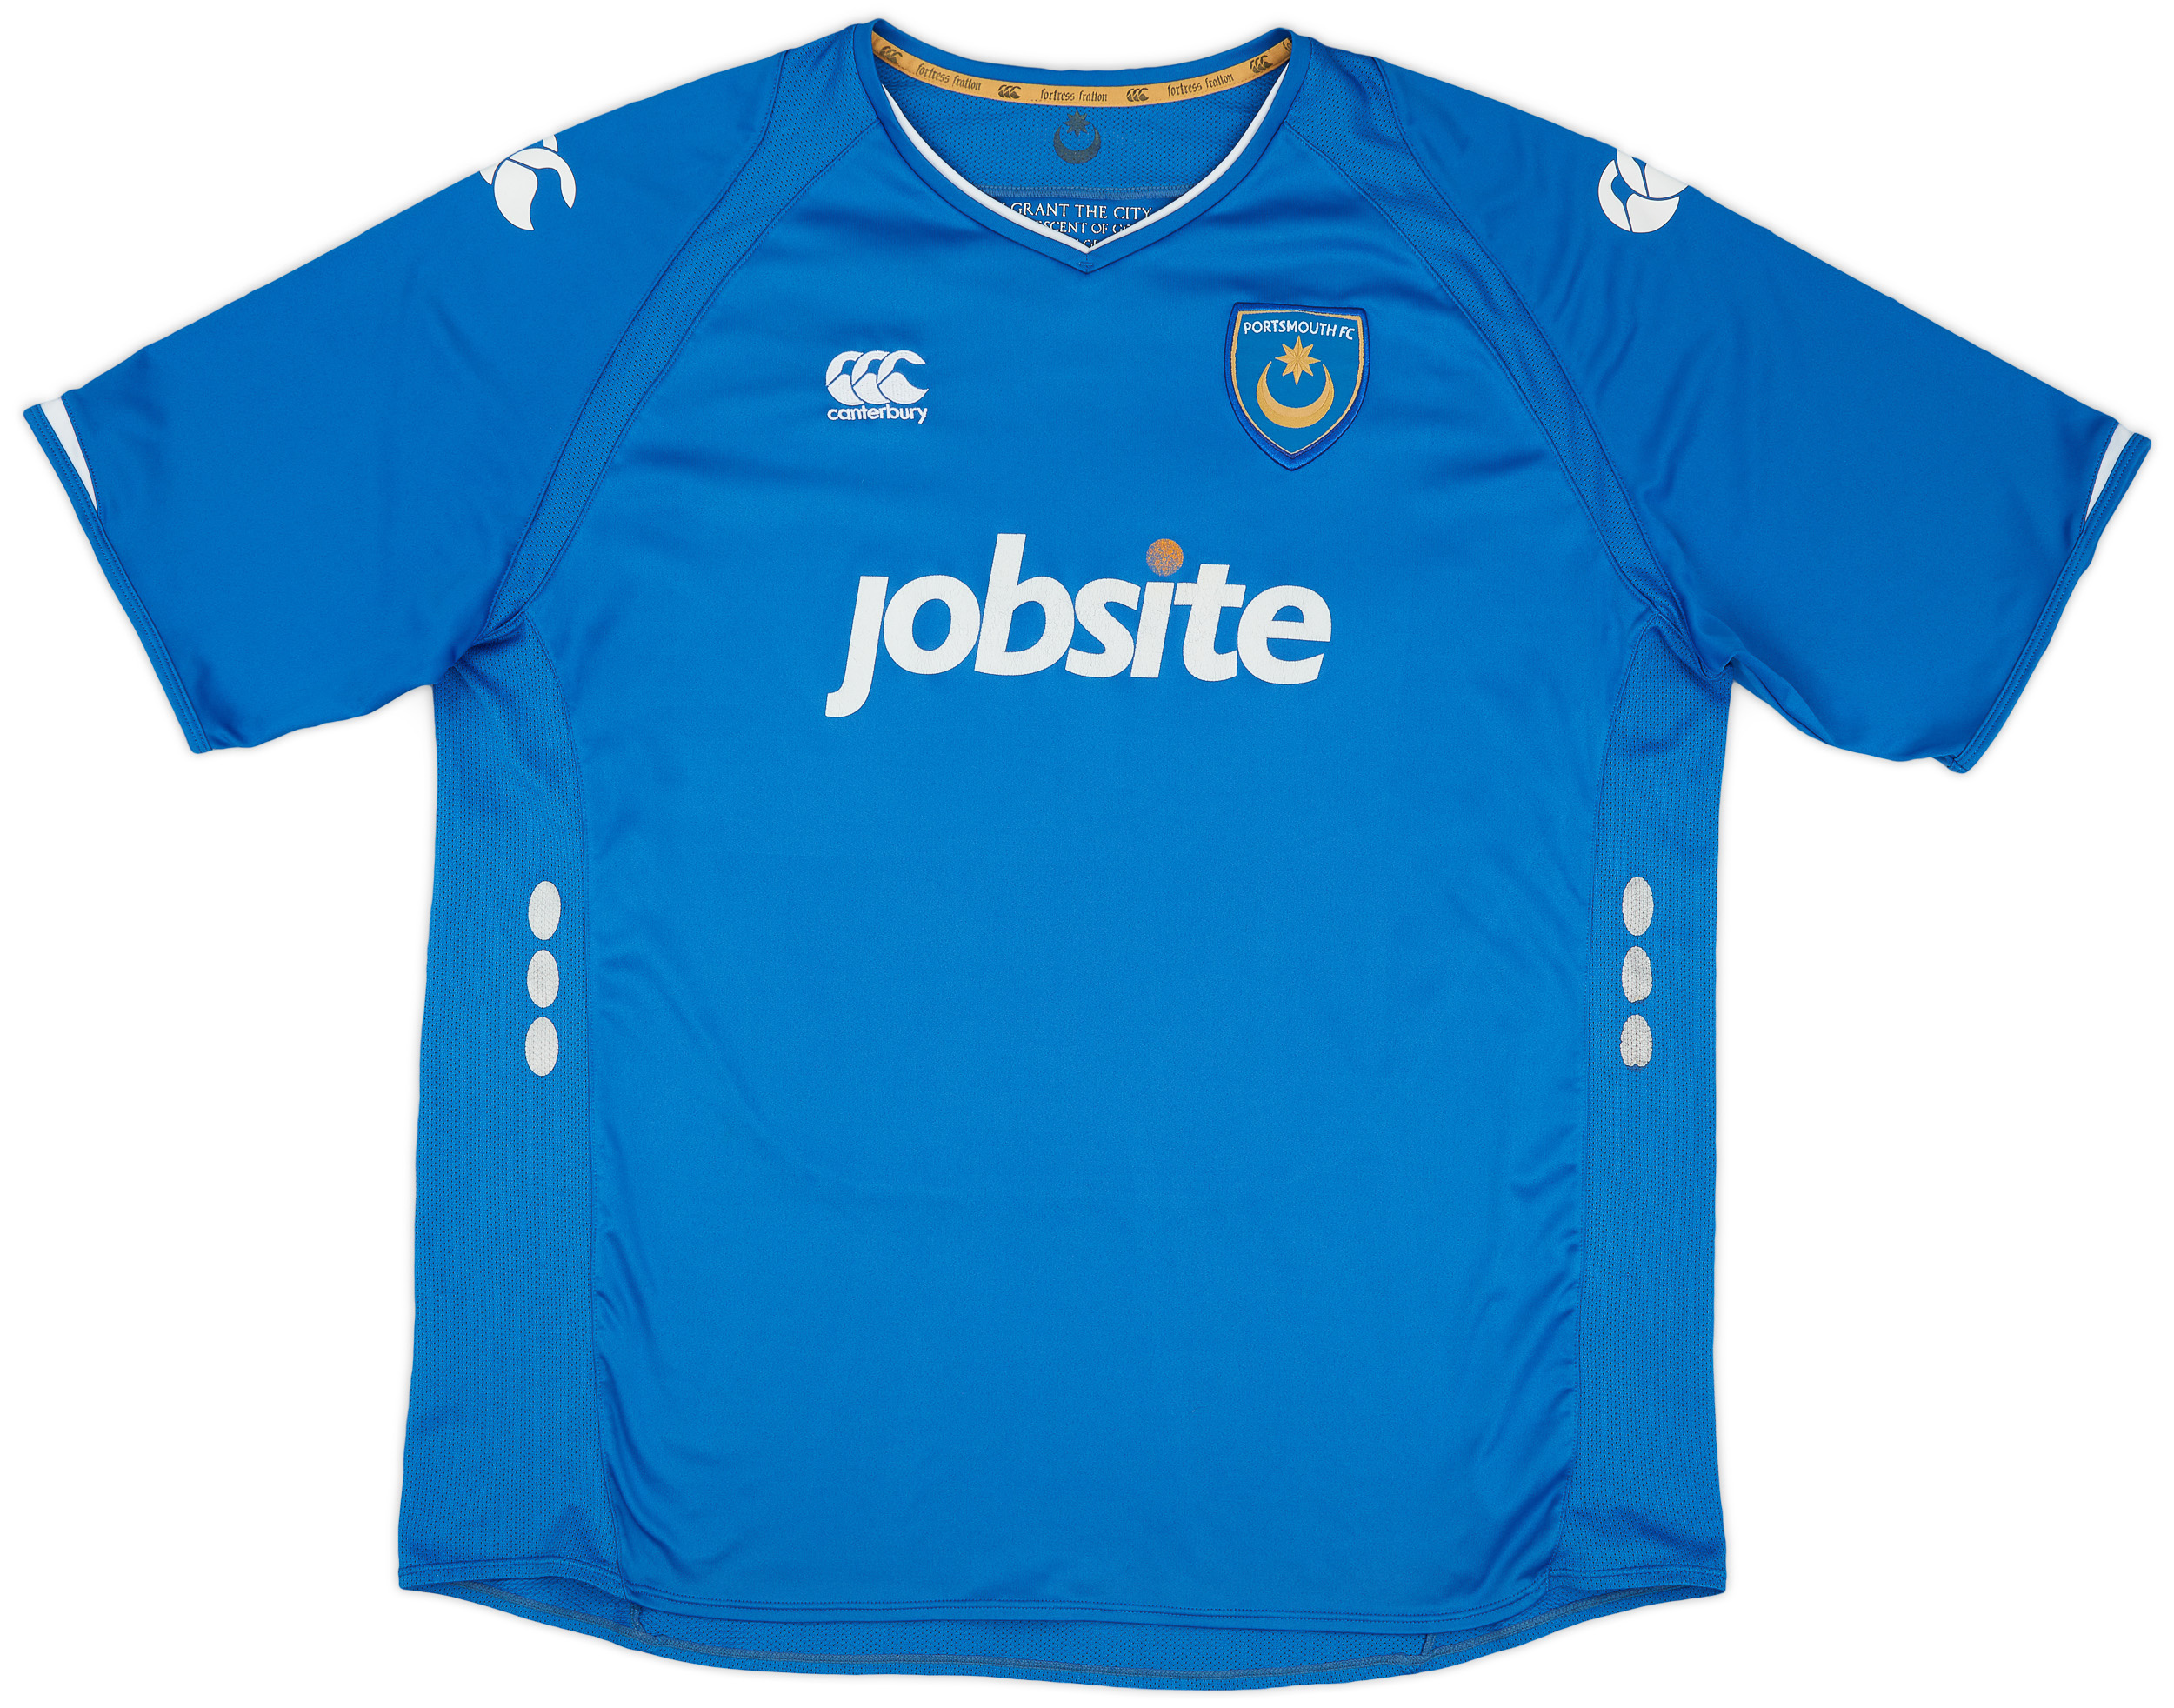 2009-10 Portsmouth Home Shirt - 6/10 - ()